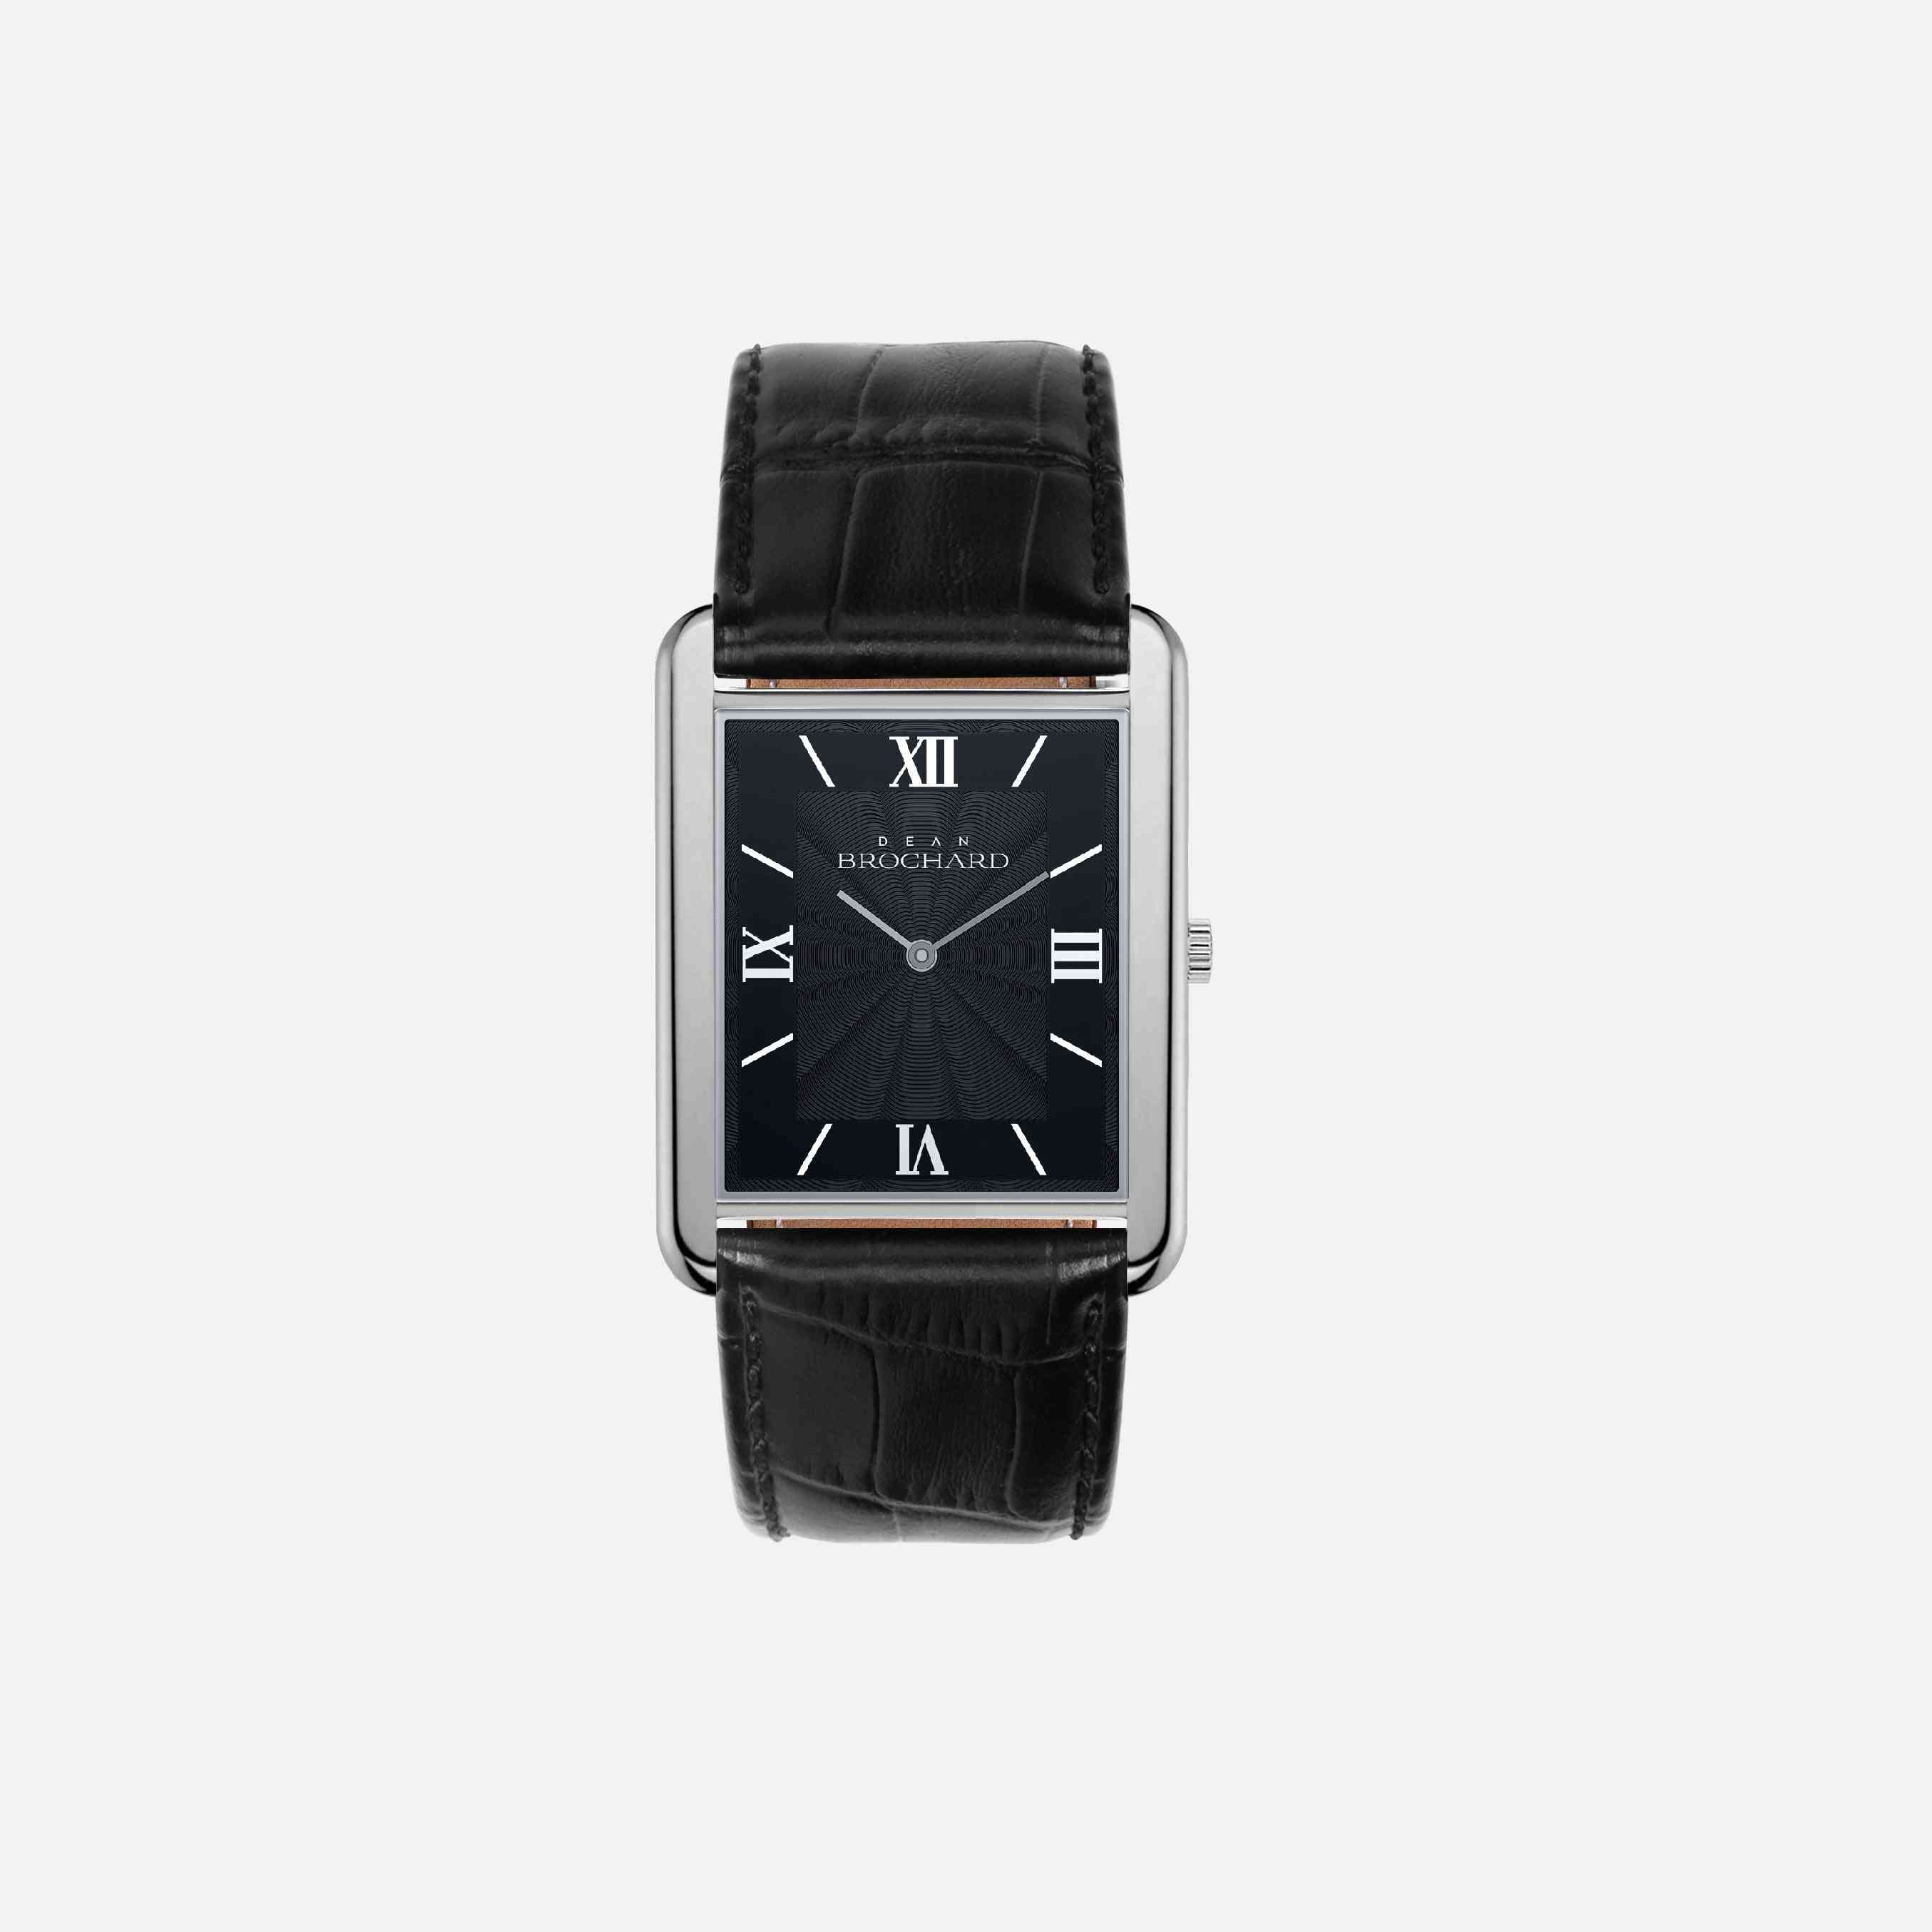 Minimalistische Armbanduhr mit quadratischem Zifferblatt aus Lederarmband